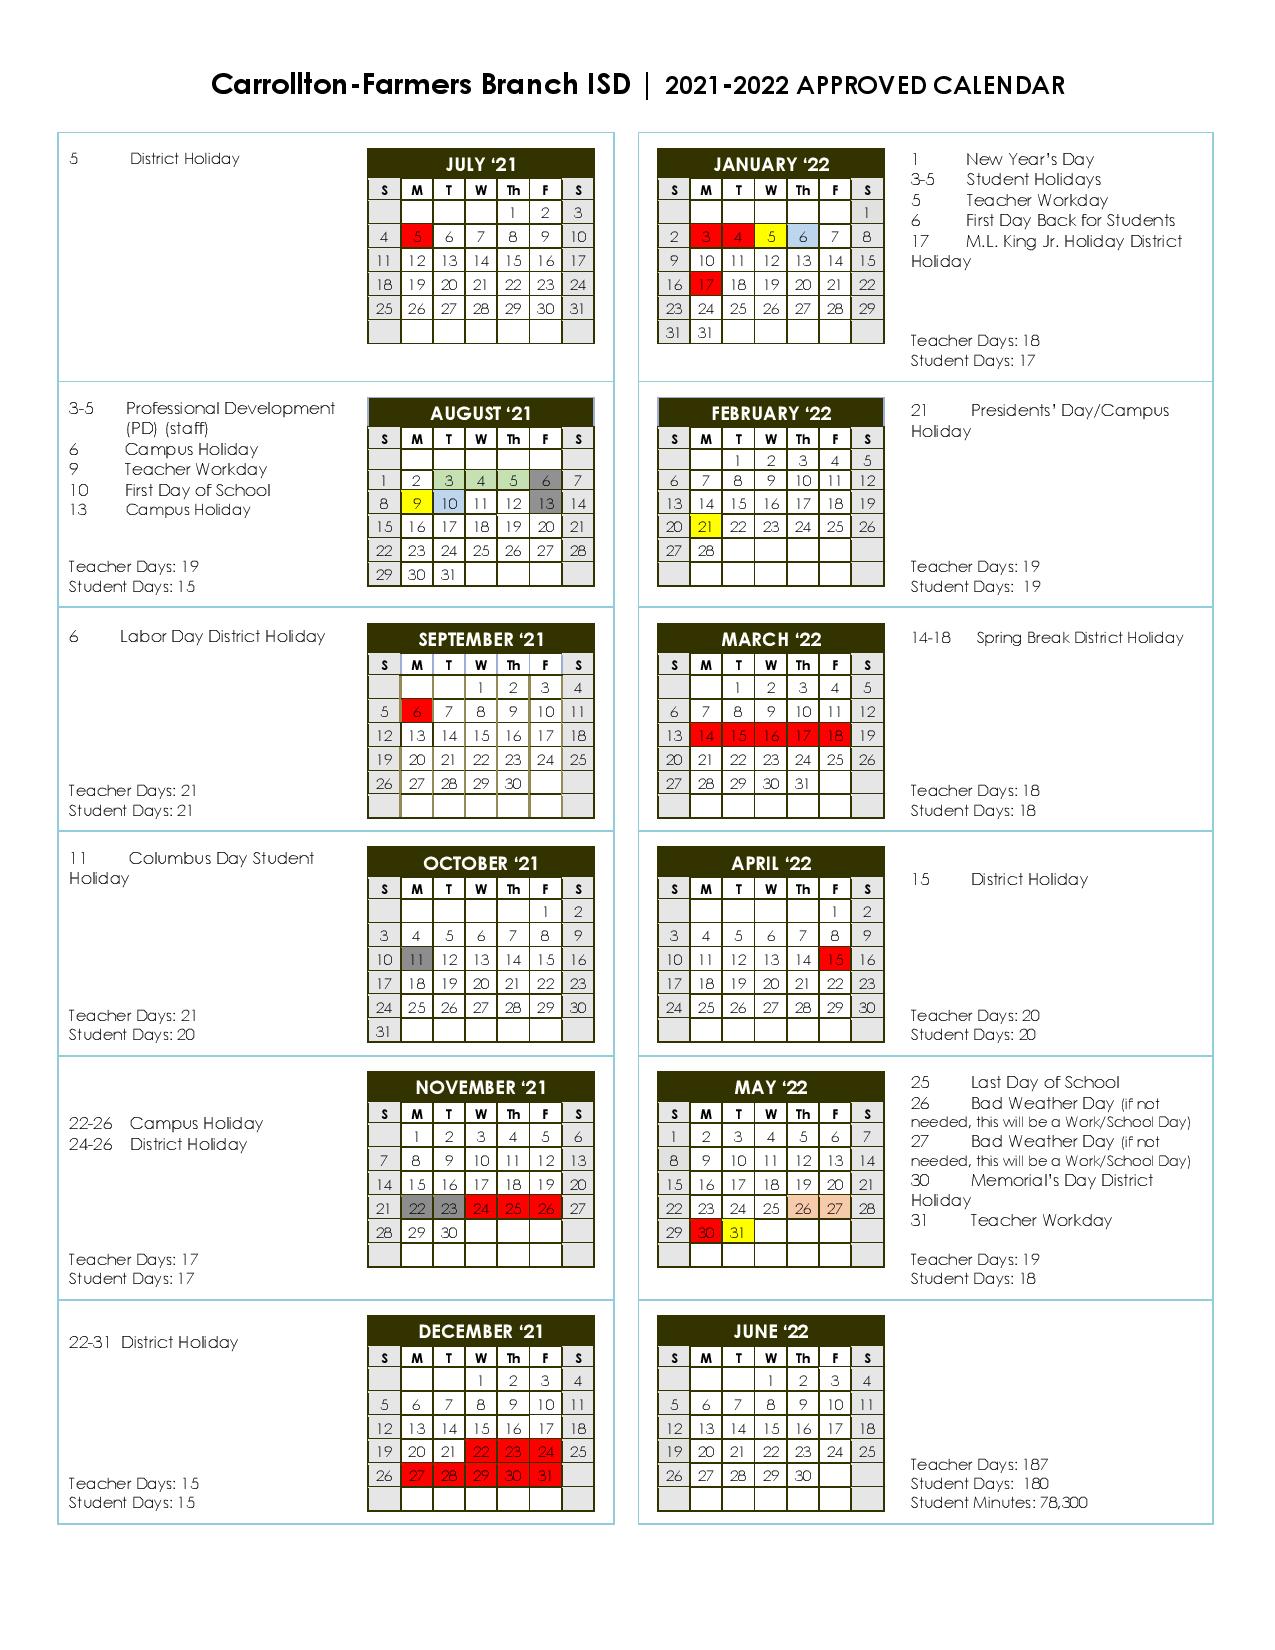 Spring Branch Isd Calendar 2022 Carrollton-Farmers Branch Independent School Calendar 2021-2022